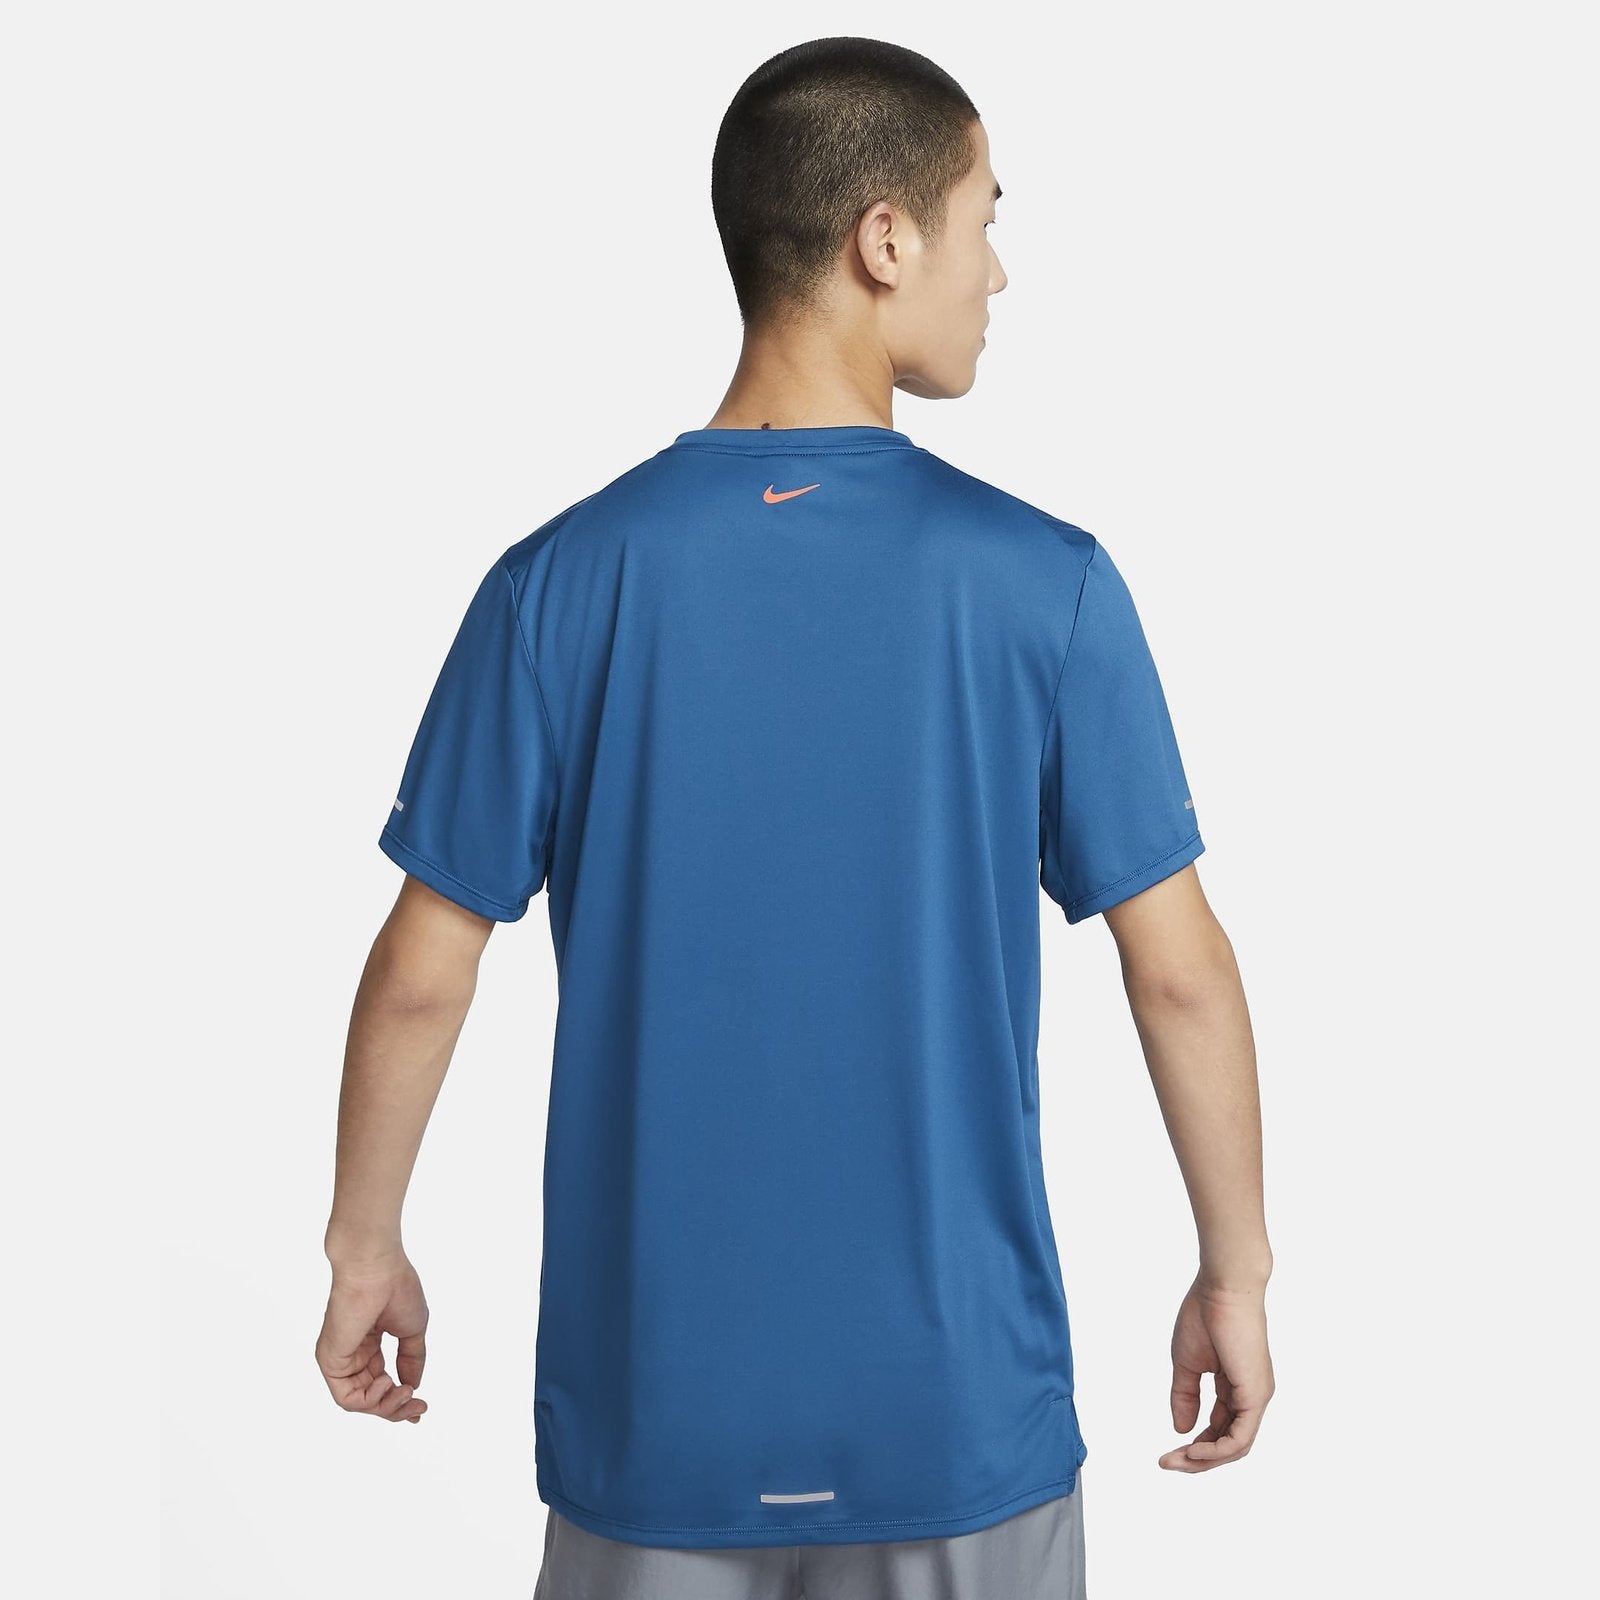 Nike Running Energy Rise 365 Men's T-Shirt APPAREL - Mens T-Shirts COURT BLUE/SAFETY ORANGE